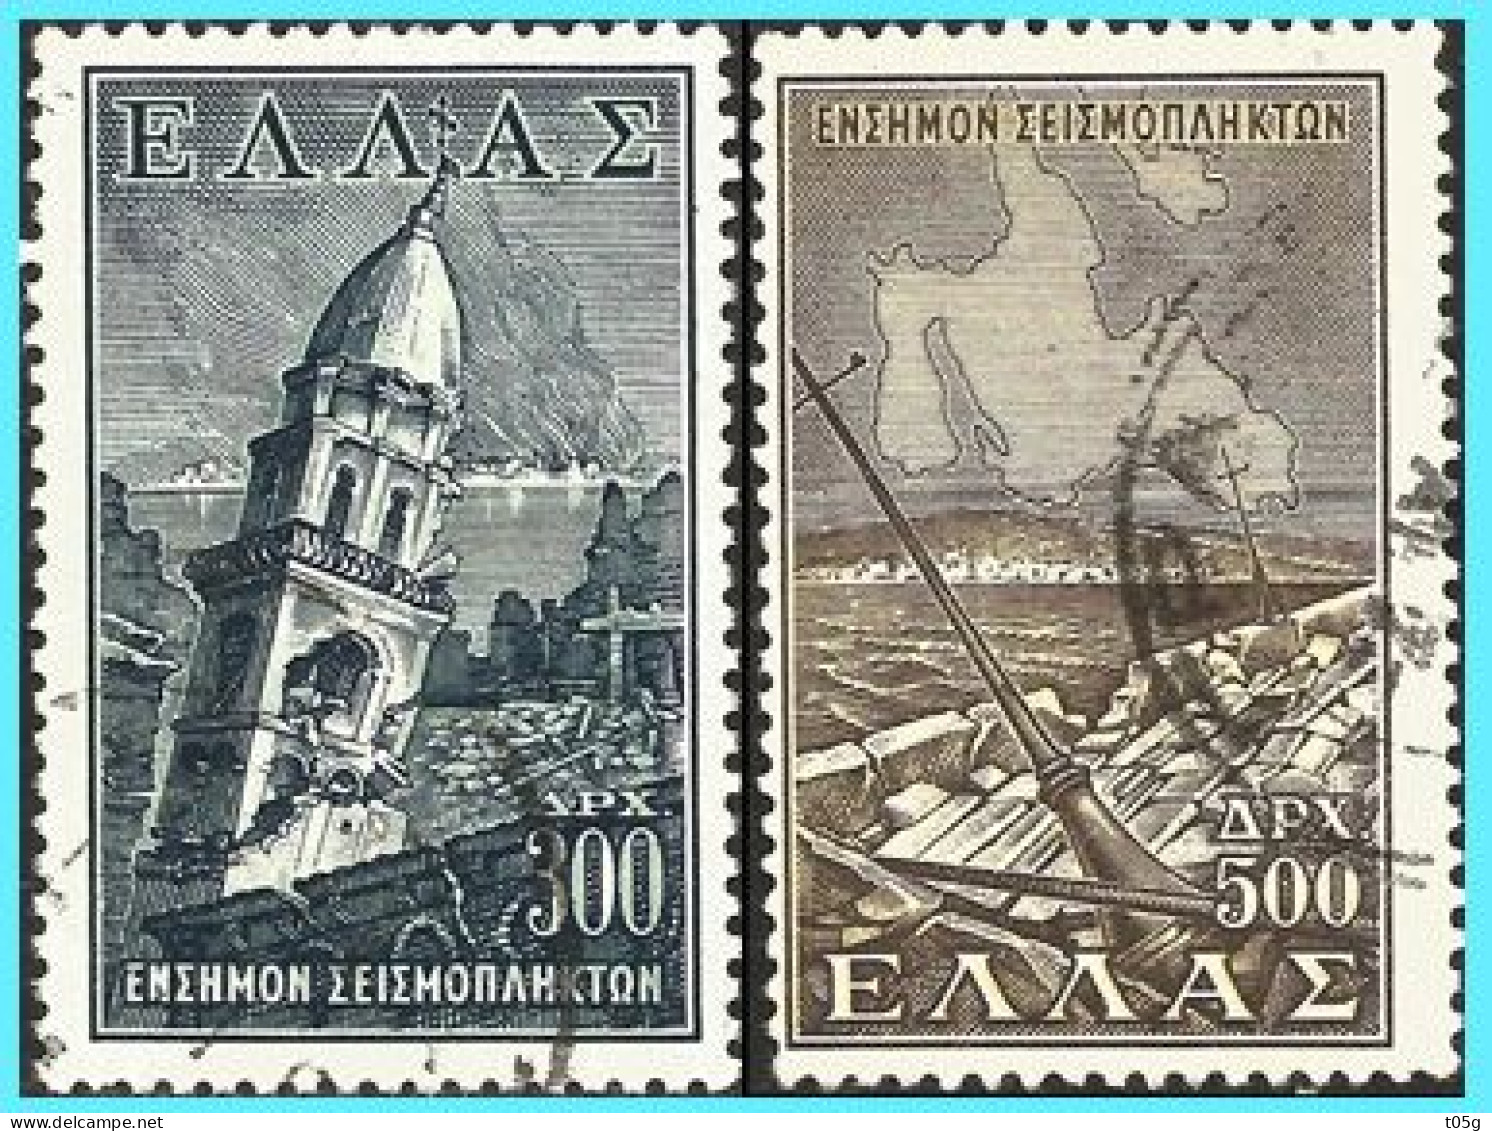 GREECE- GRECE - HELLAS 1953: " Ionian Islands Earthquake Fund Issue" Complet Set Used - Wohlfahrtsmarken